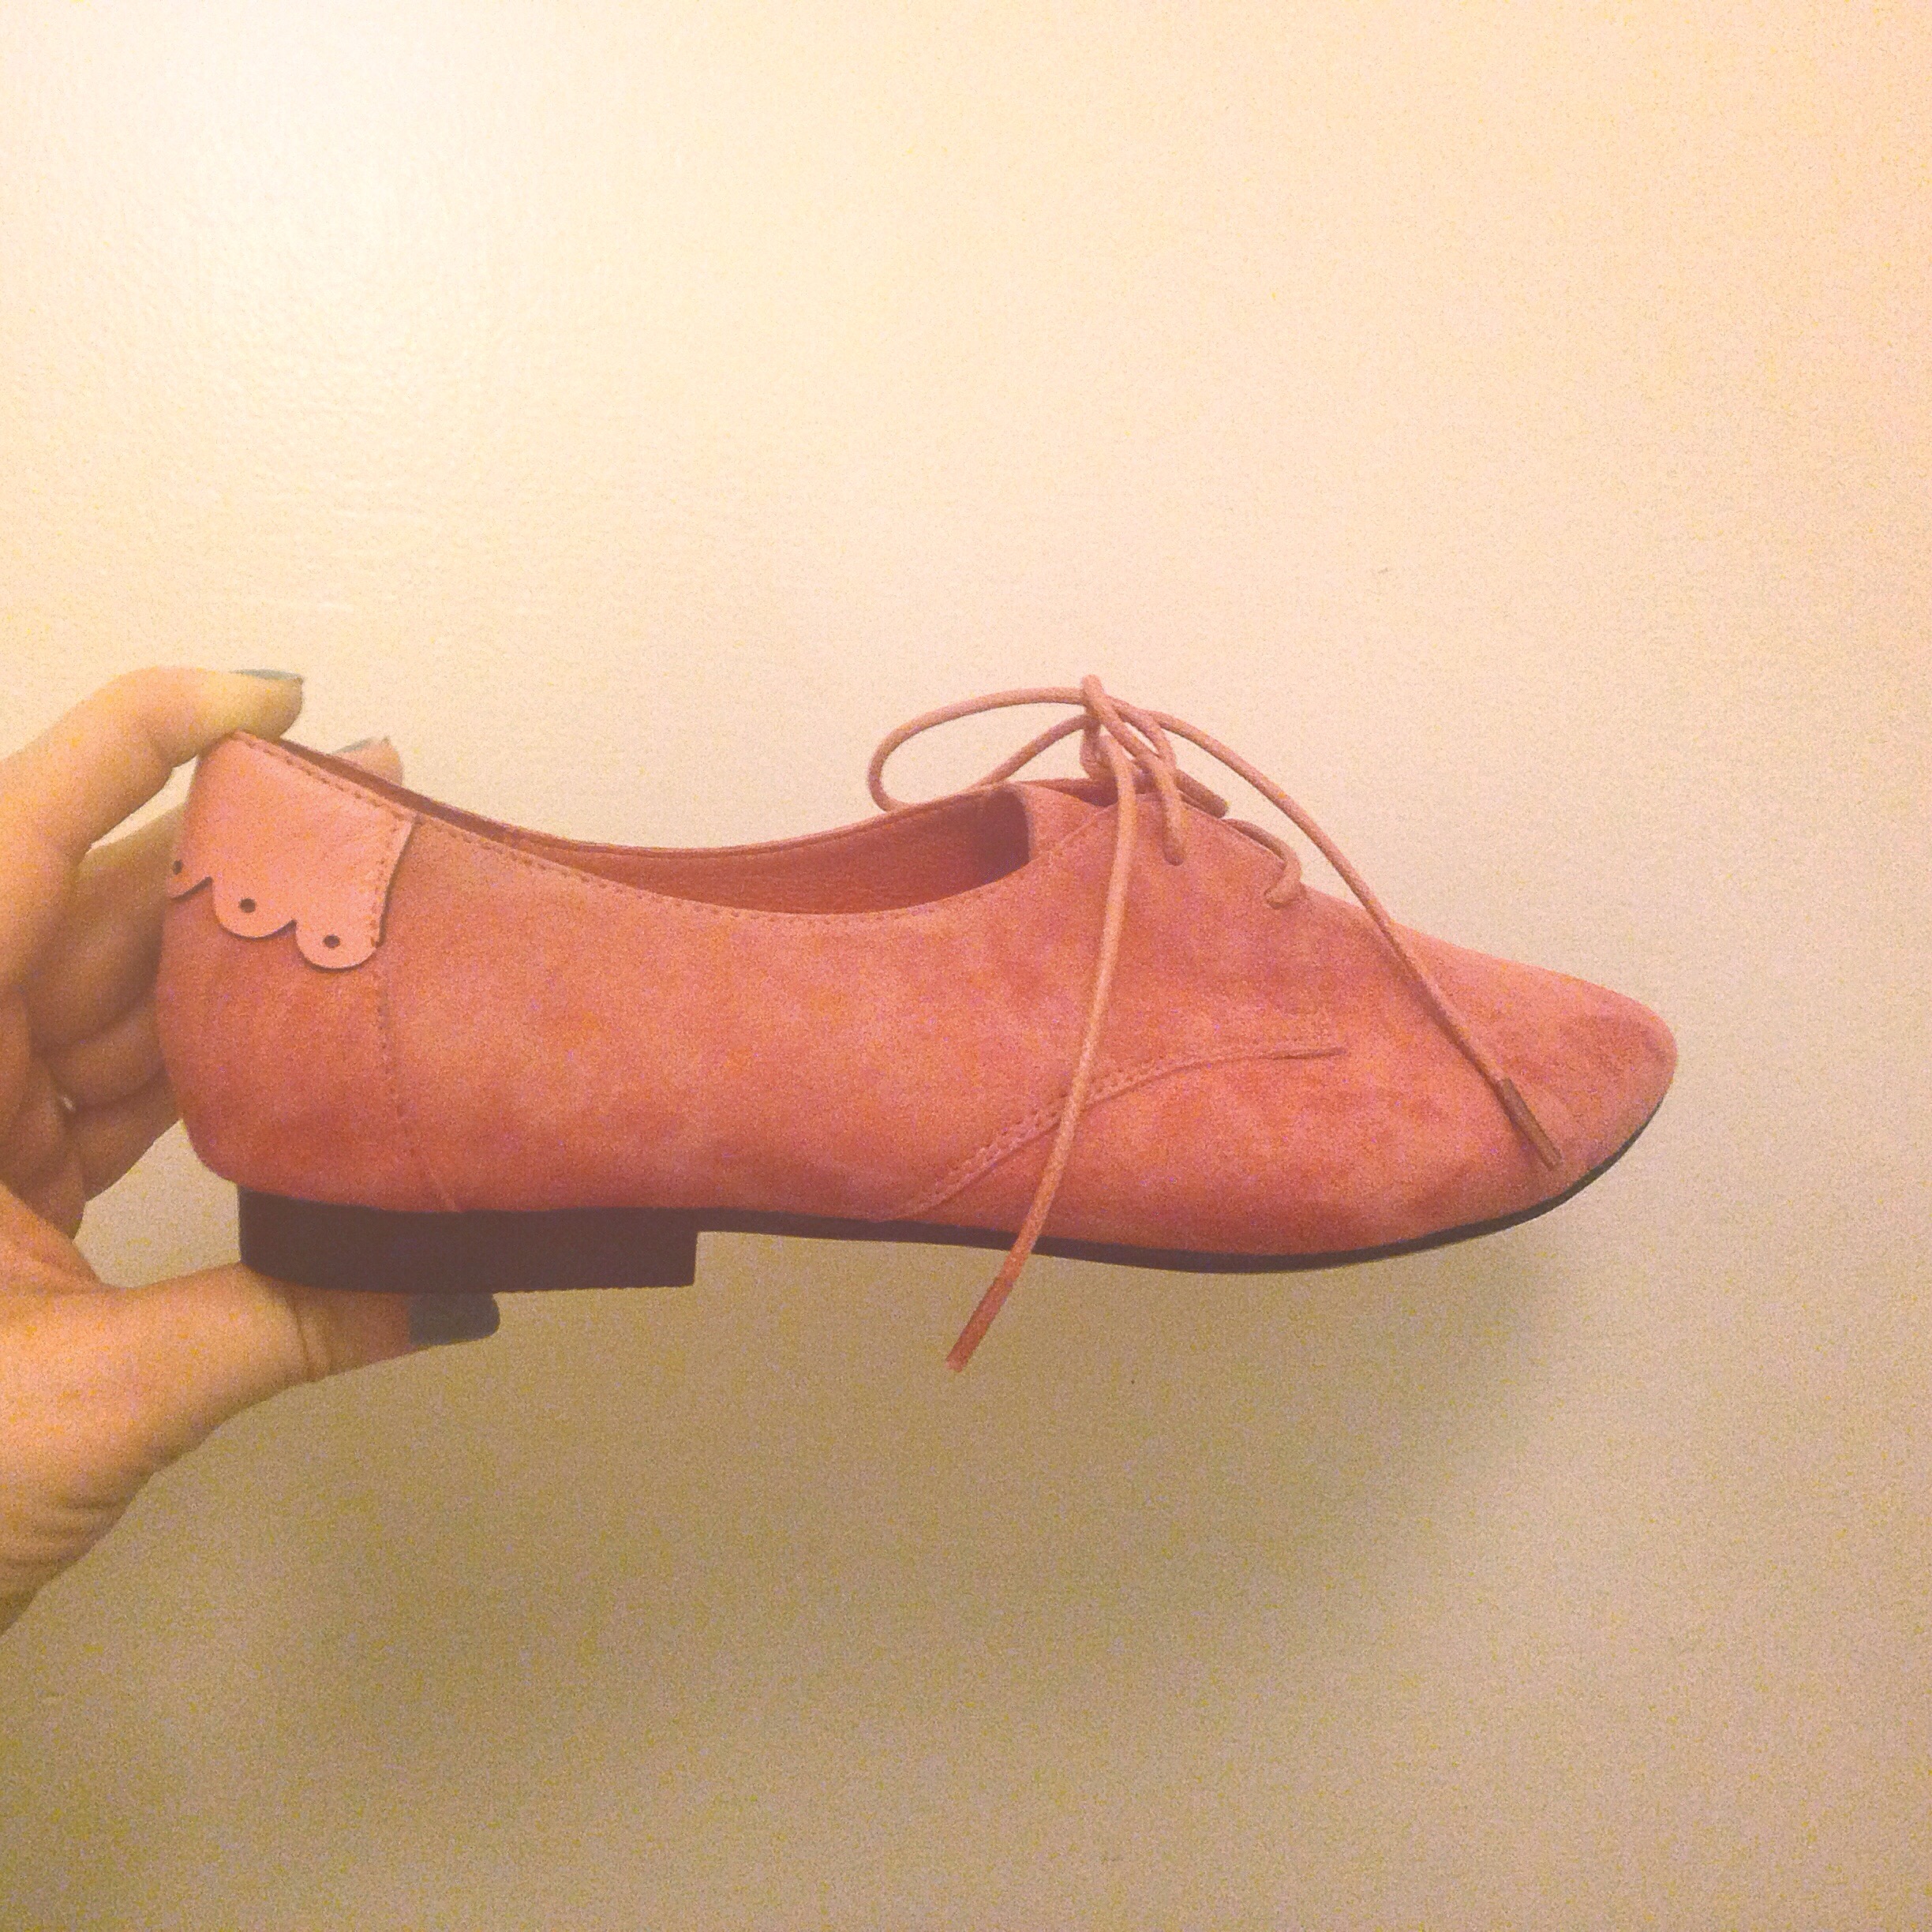 Edith & Ella pink vintage inspired shoes